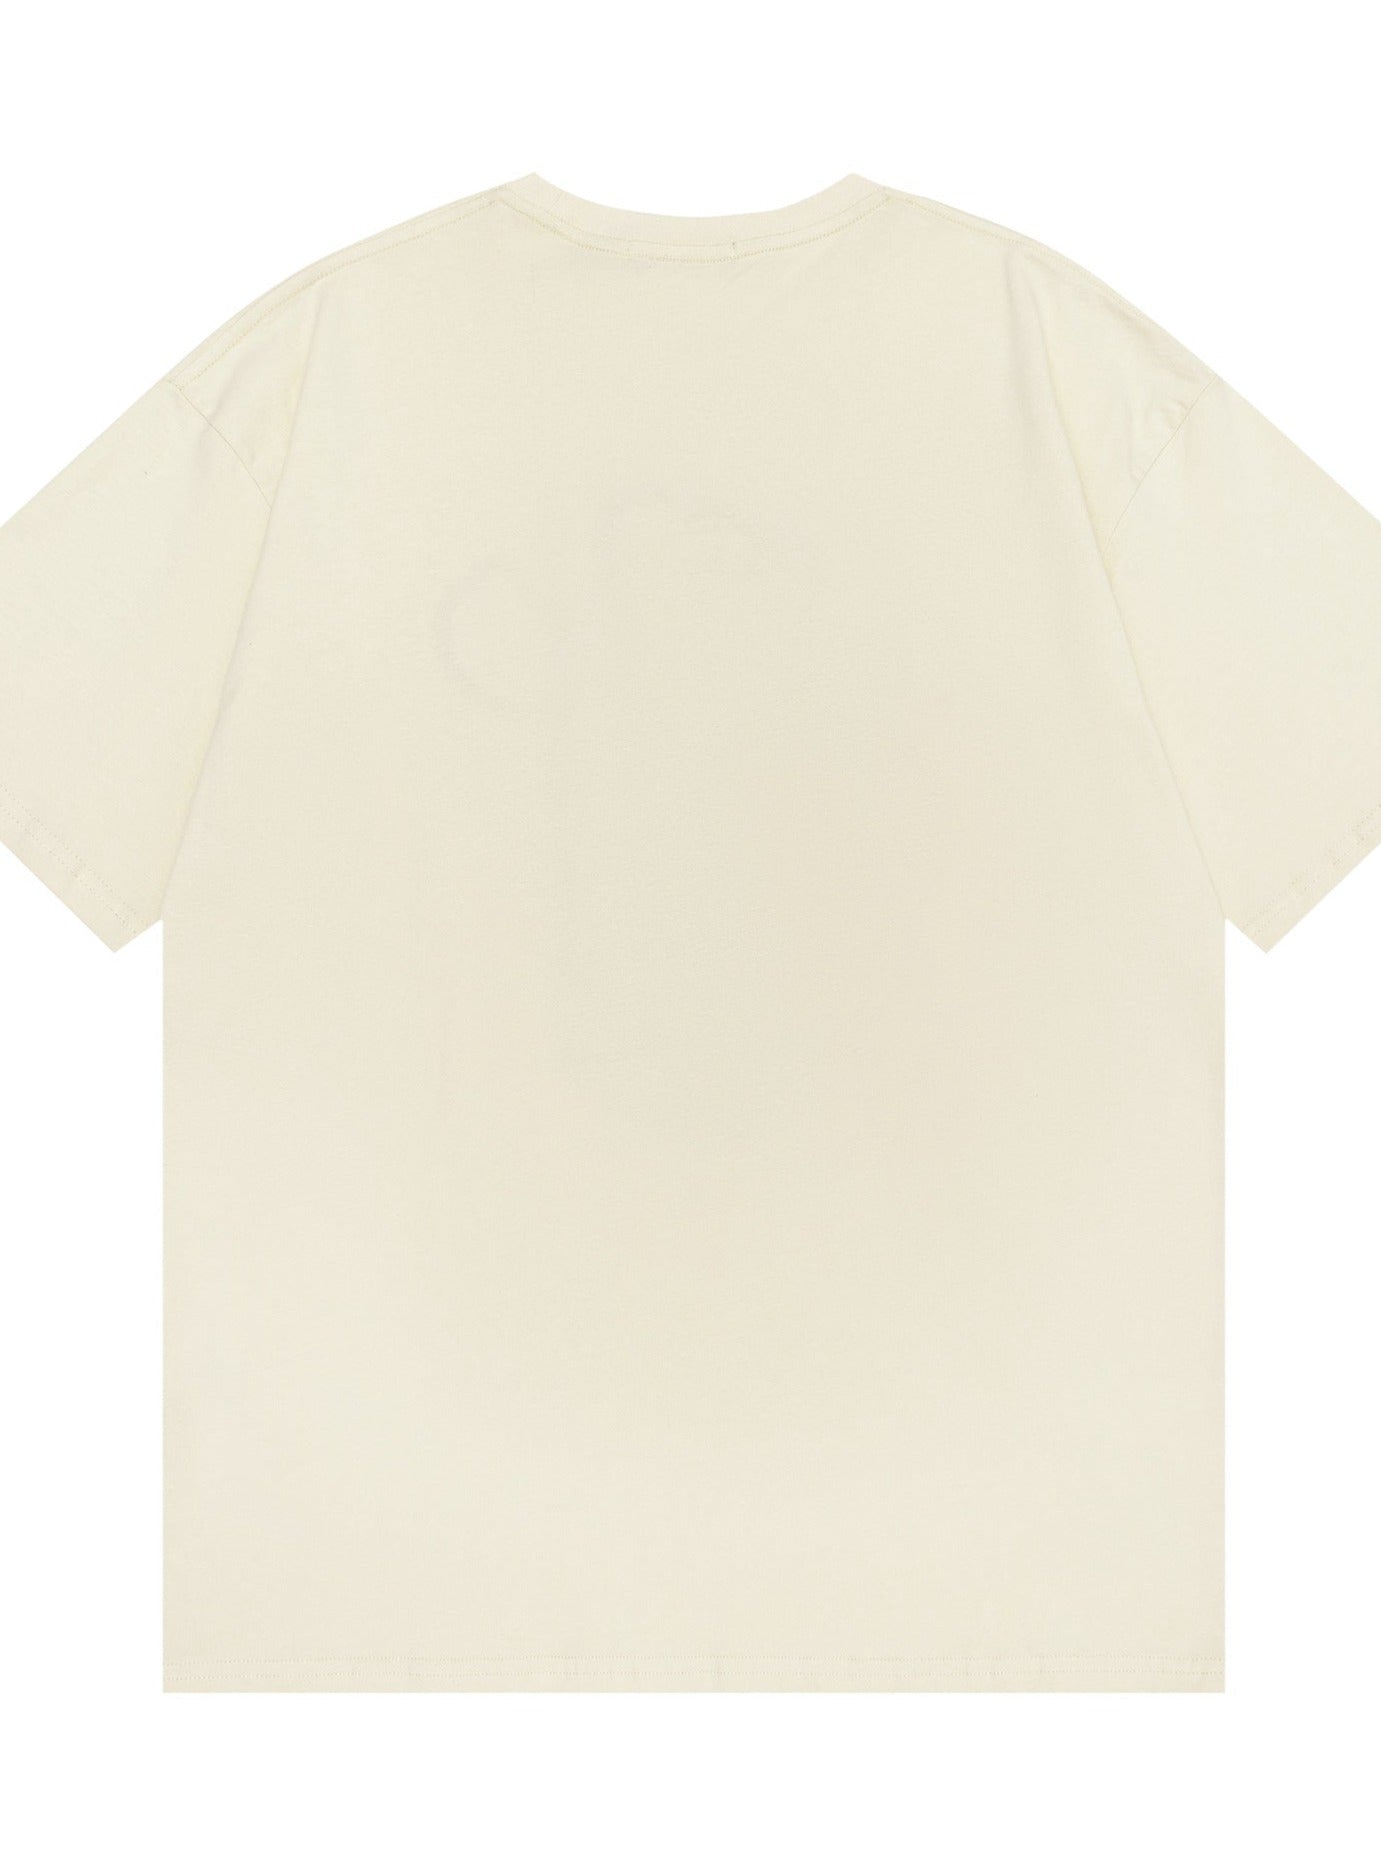 ACCENT 270g创意印花情侣短袖T恤男ins潮牌复古半袖体恤衫短t-shirt